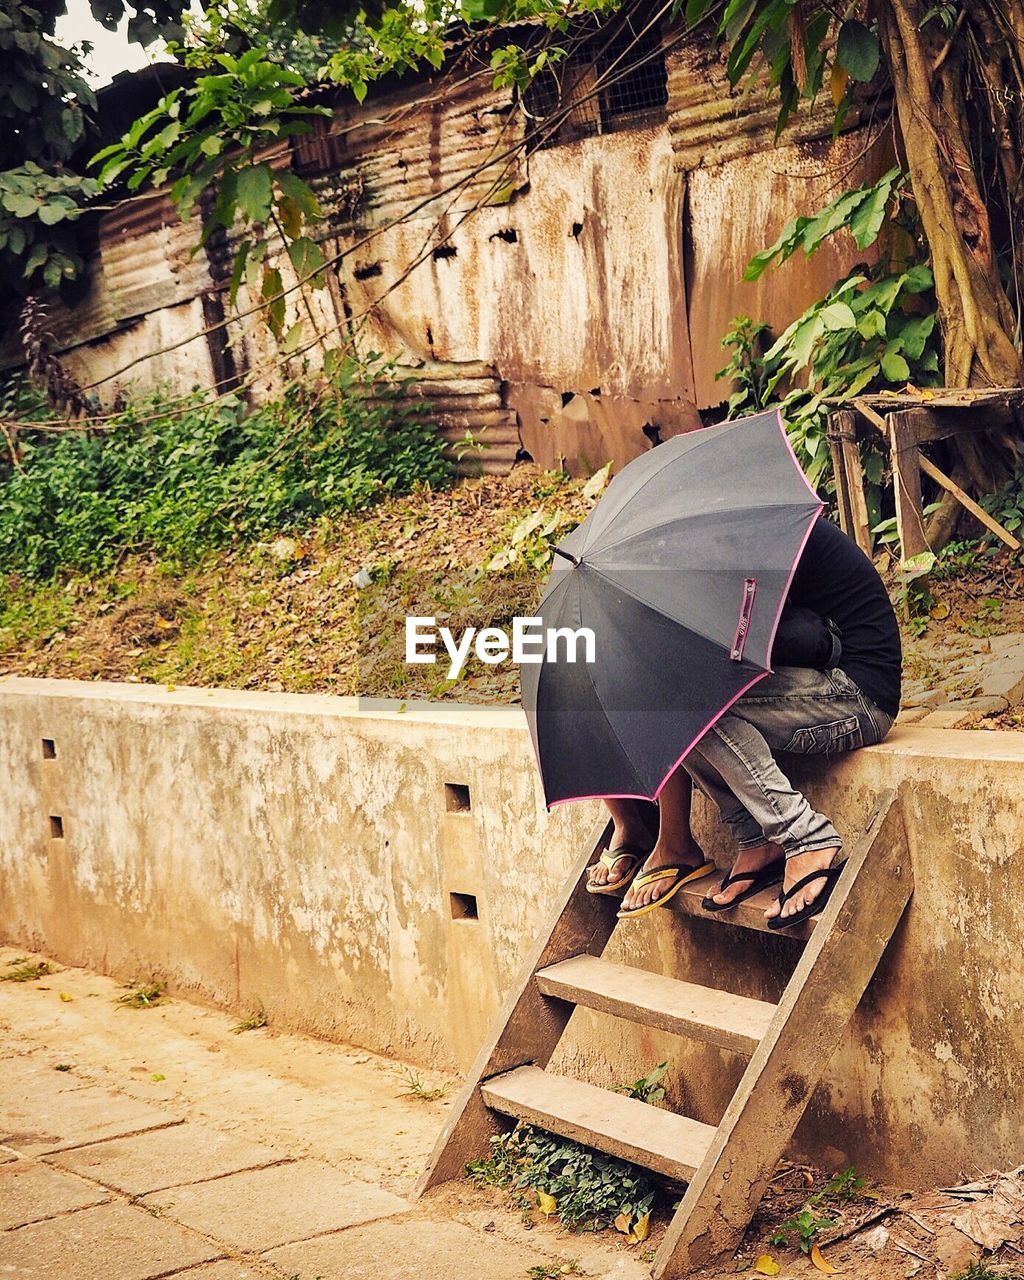 Couple on retaining wall hiding under umbrella